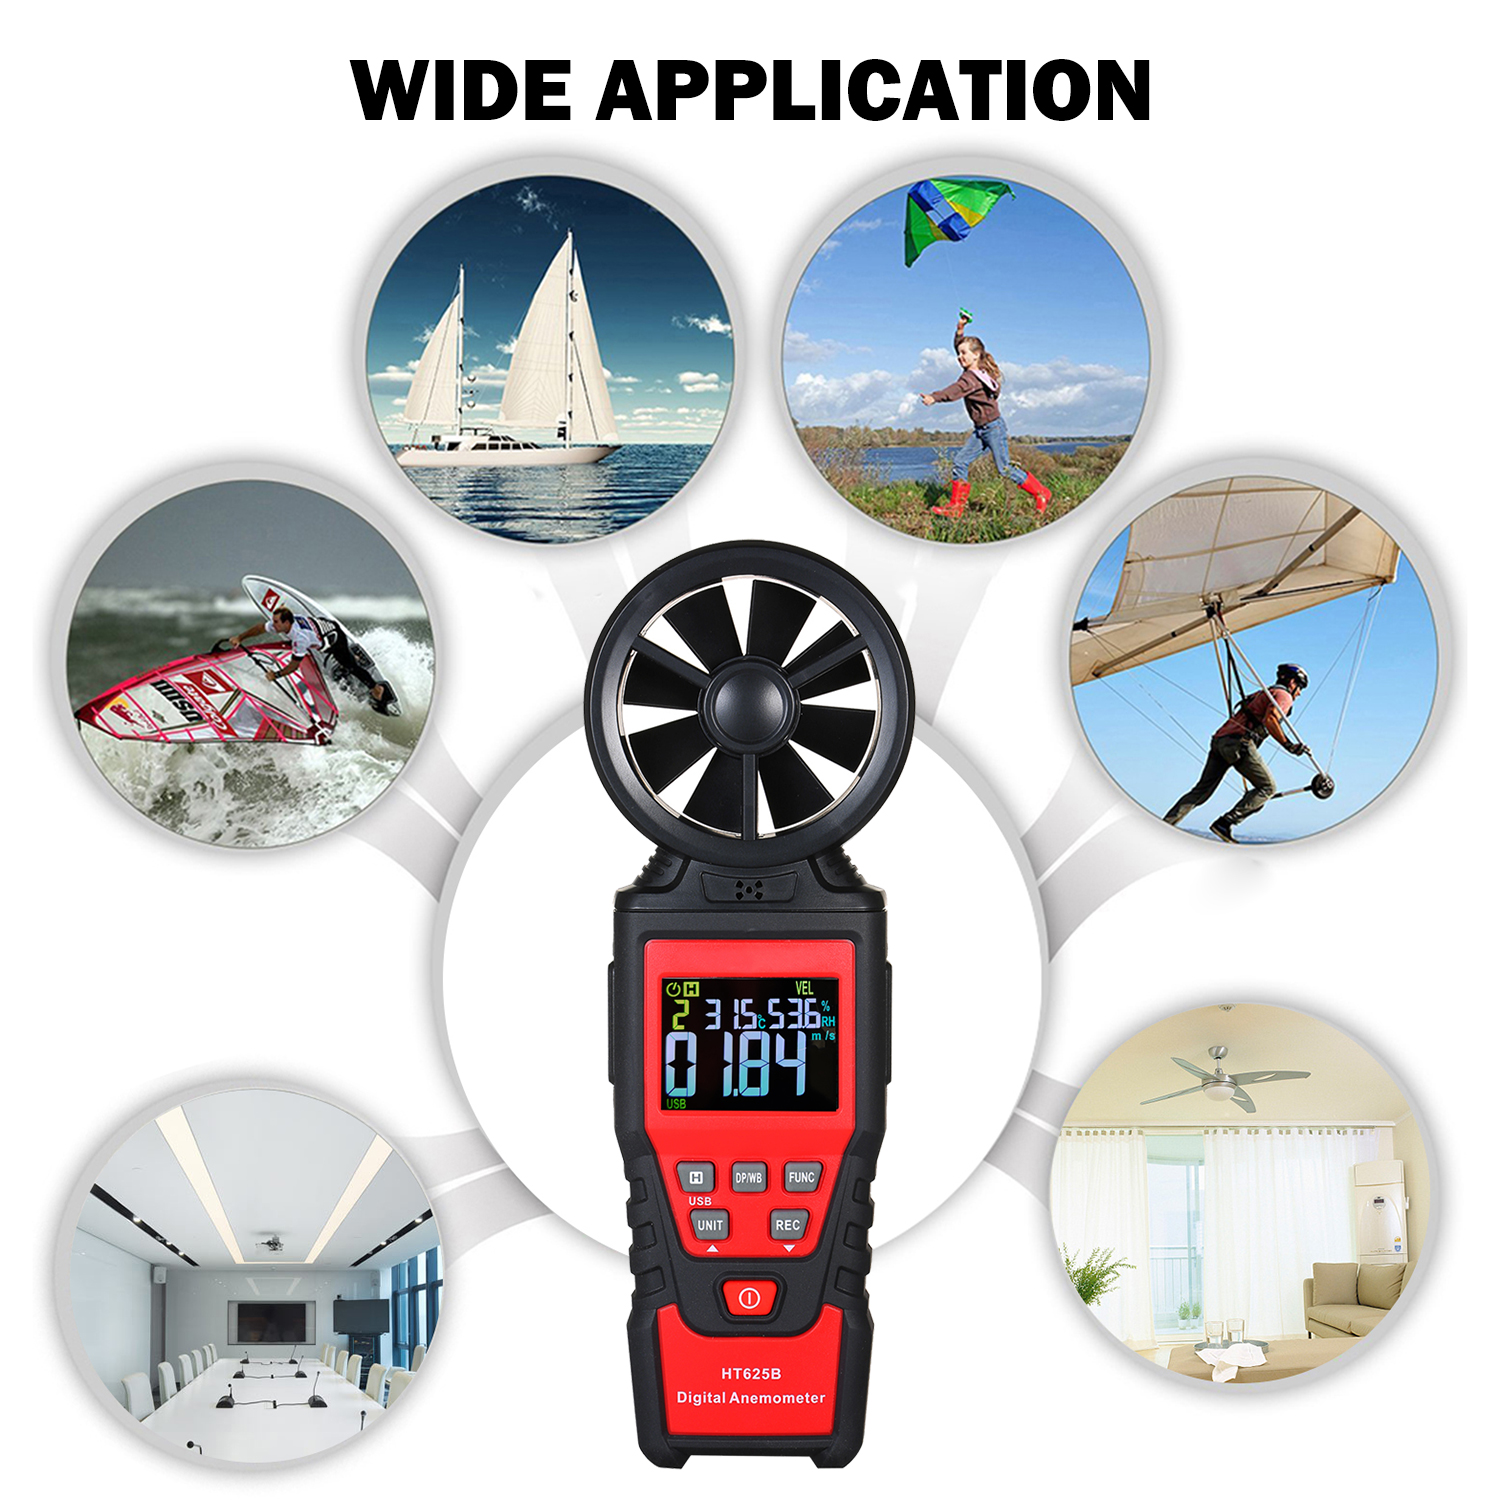 Handheld Anemometer Digital Wind Speed Meter with USB, LCD Color Display Measures Wind Speed Humidity Temperature 5